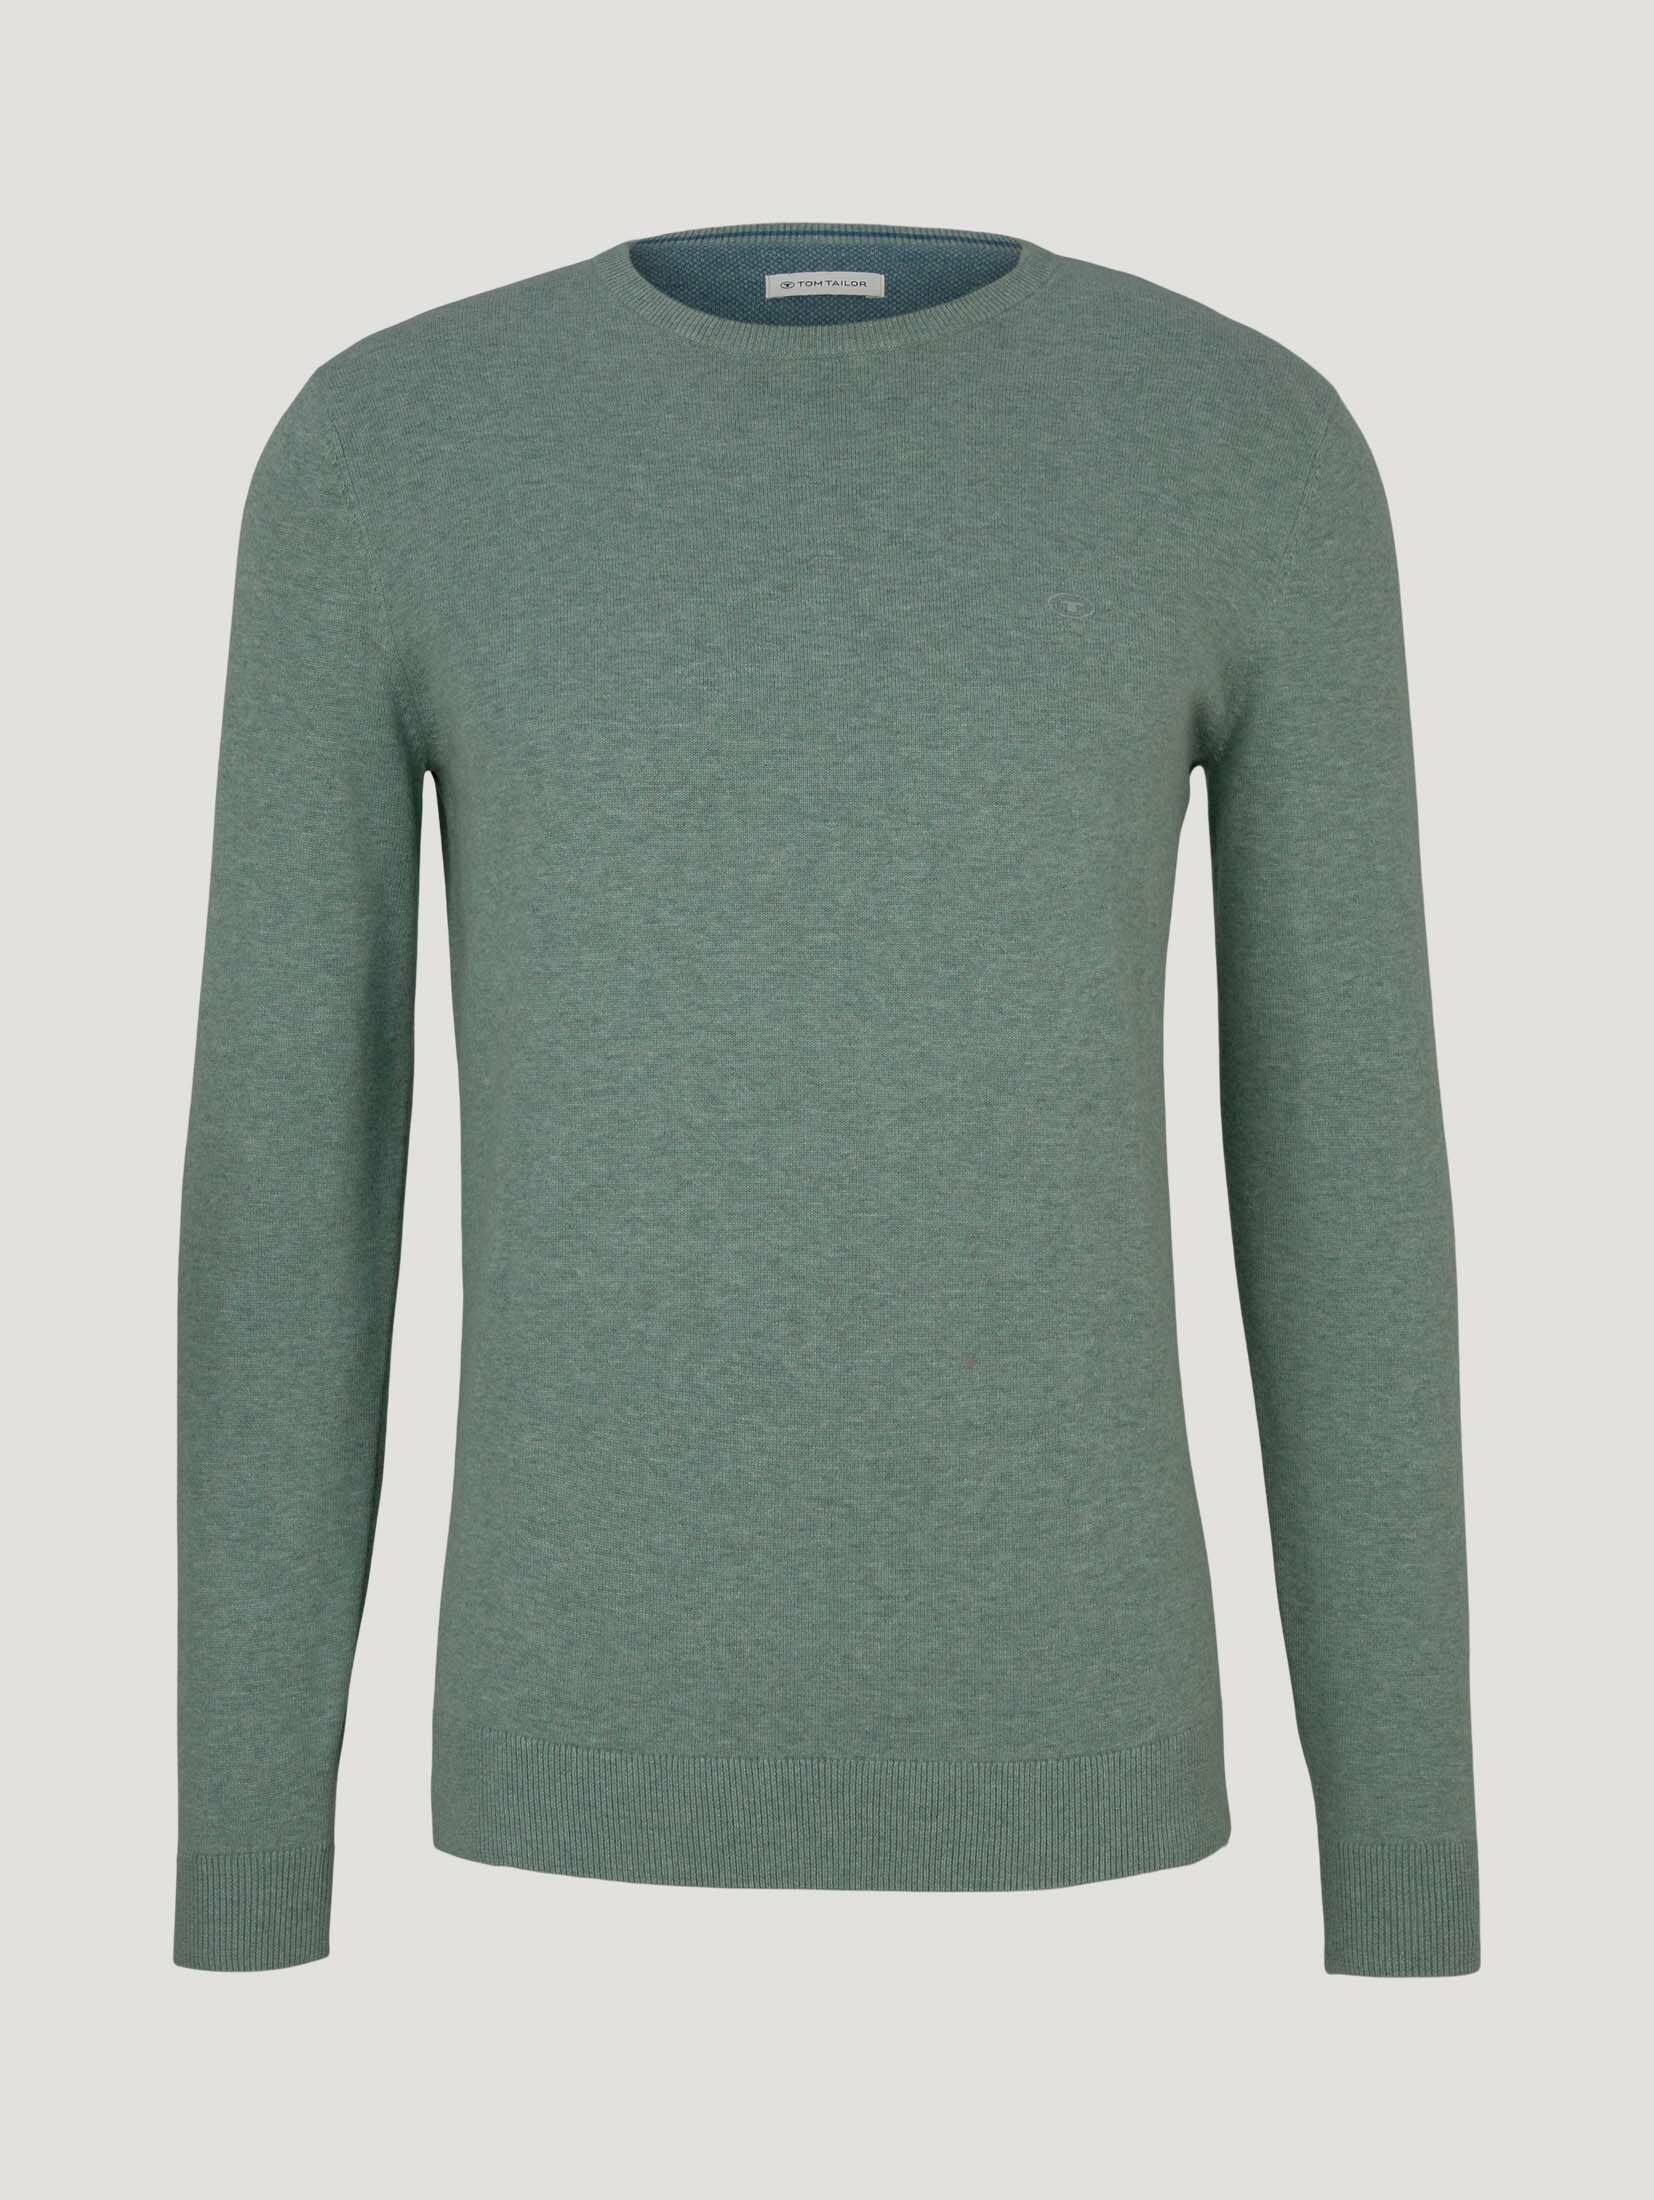 Пуловер Tom Tailor Tom Tailor Strick, зеленый пуловер tom tailor размер l голубой